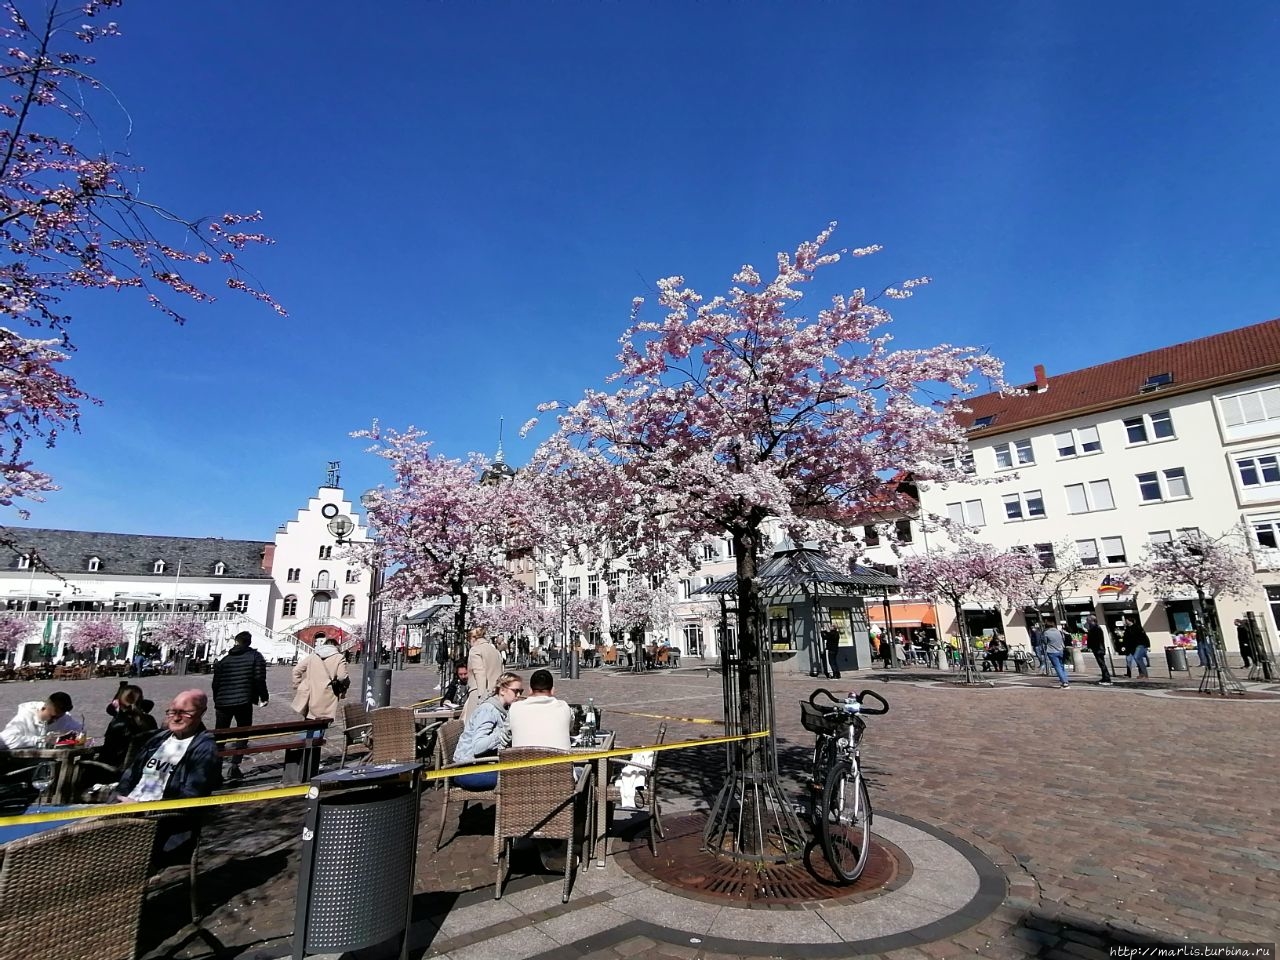 Исторический центр города Ландау Ландау, Германия